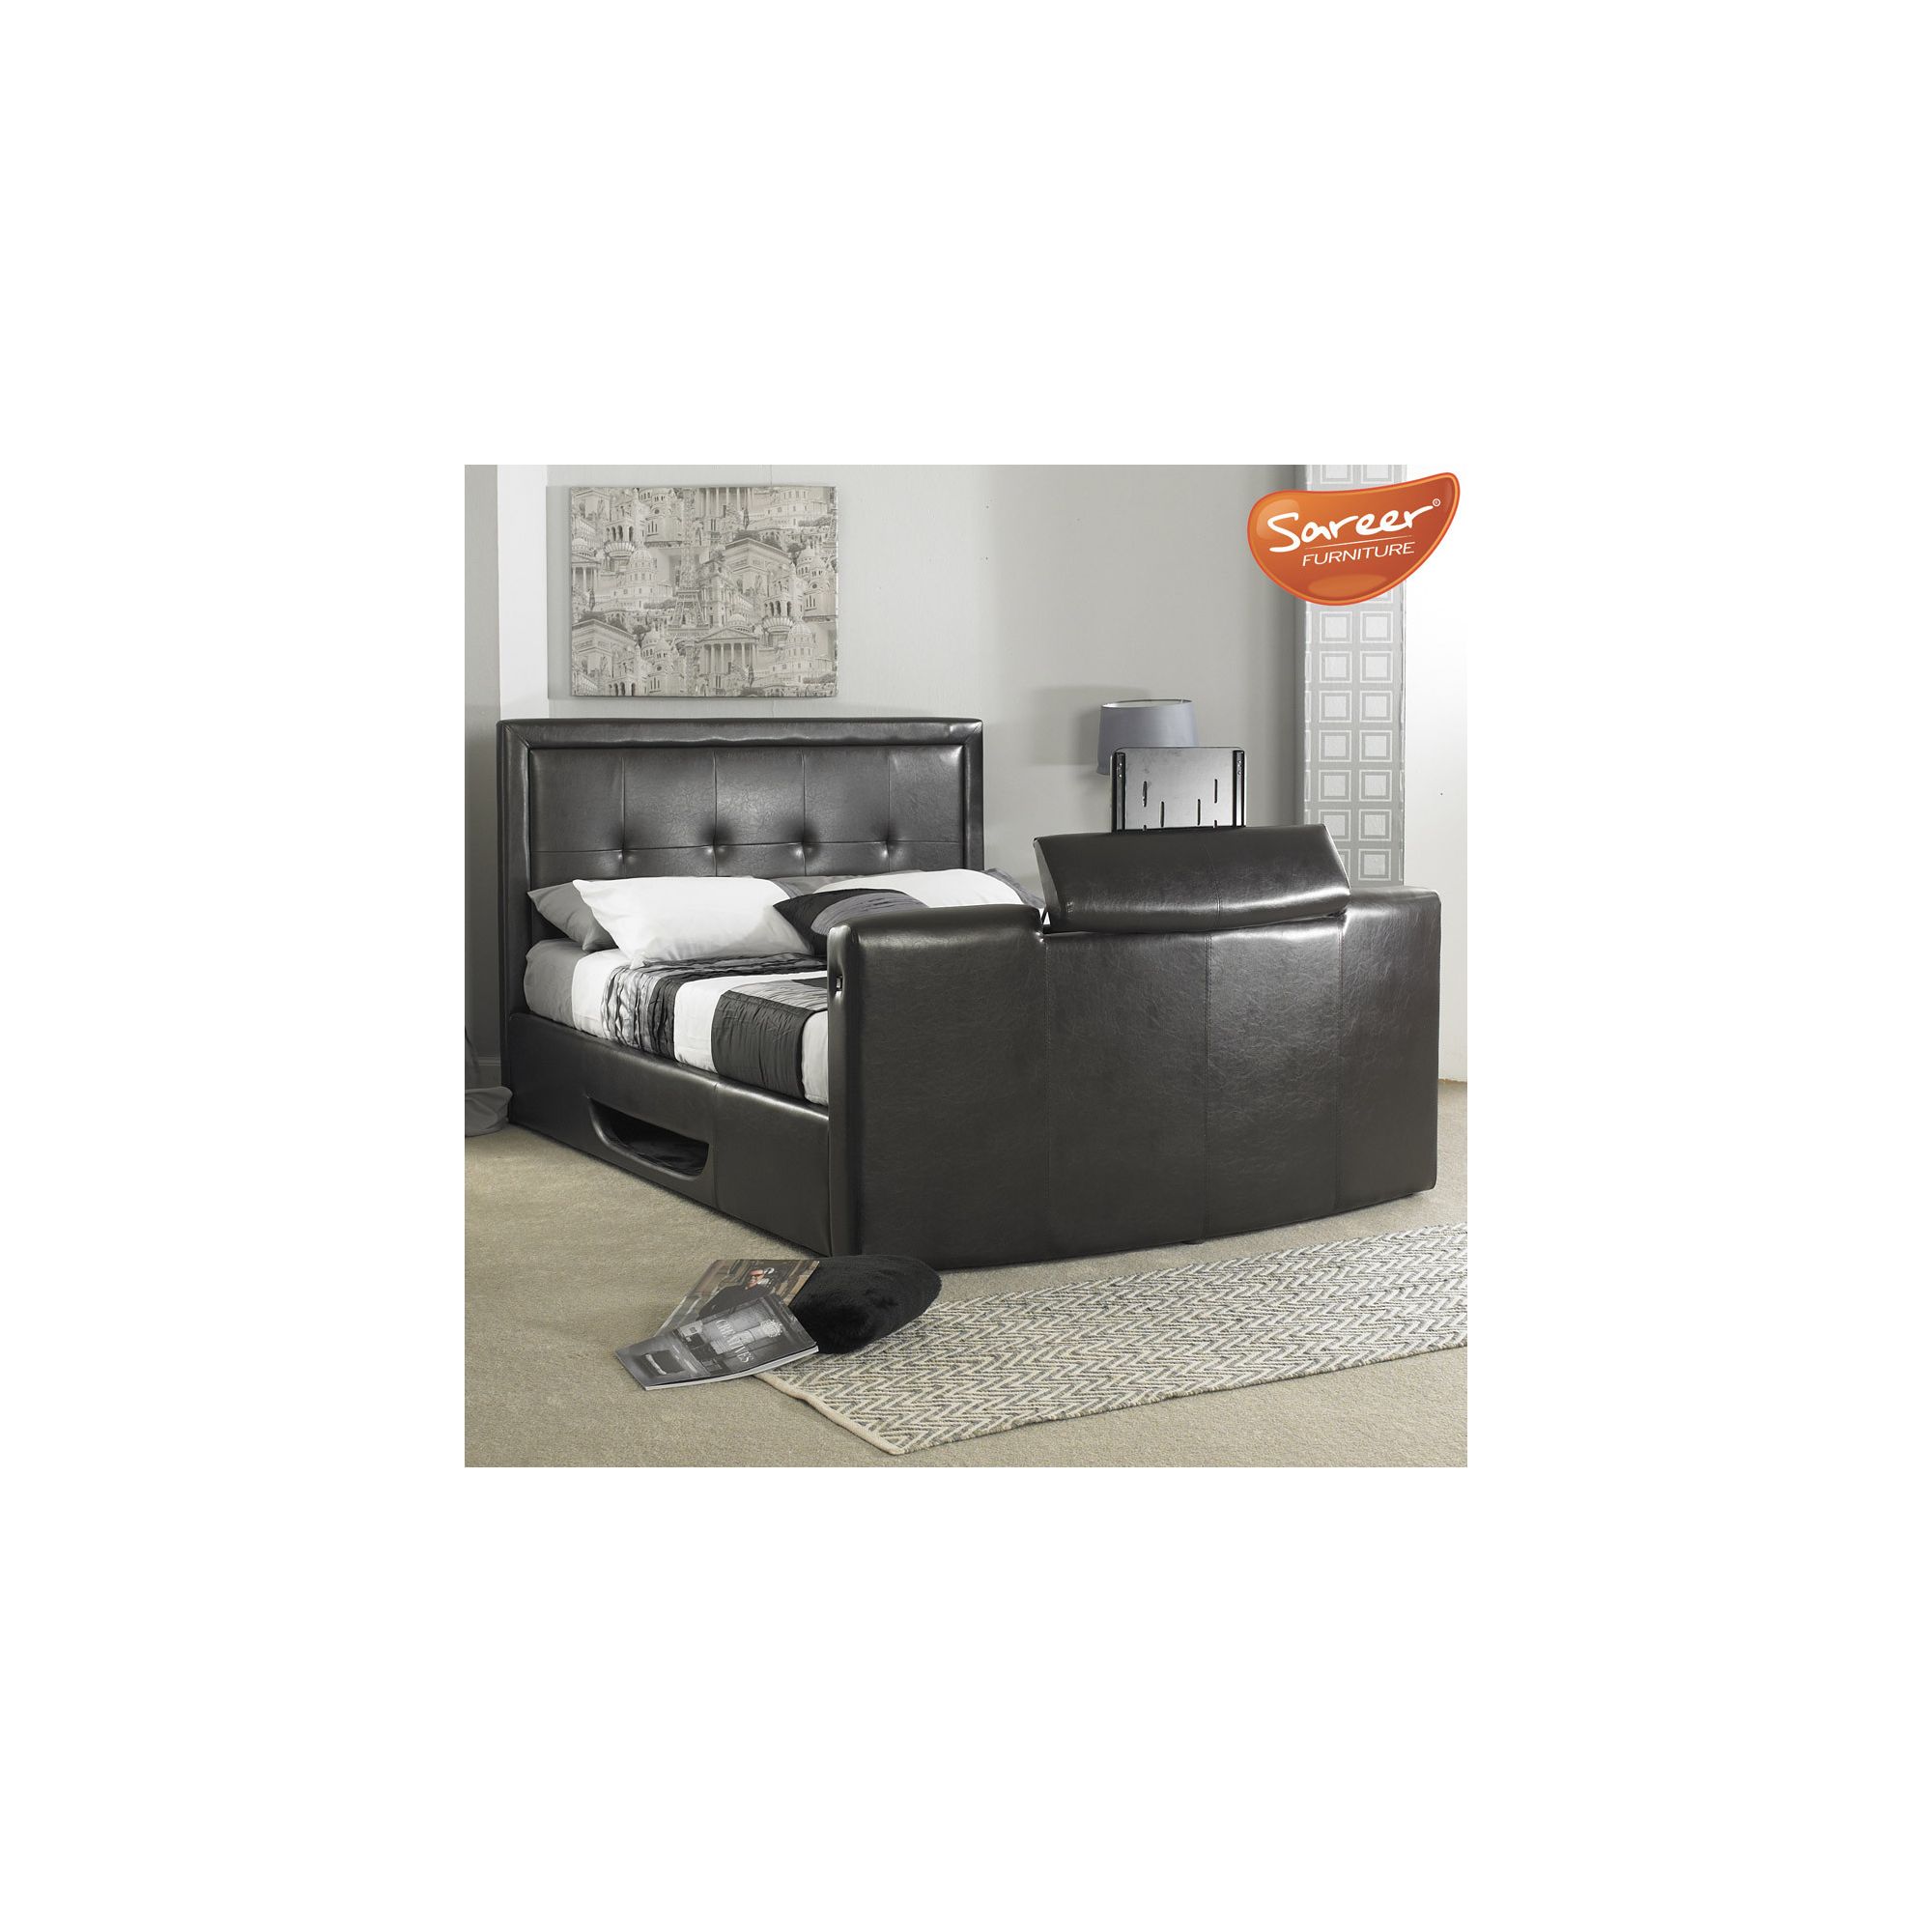 Sareer Furniture Royale TV Bed - Super King at Tesco Direct